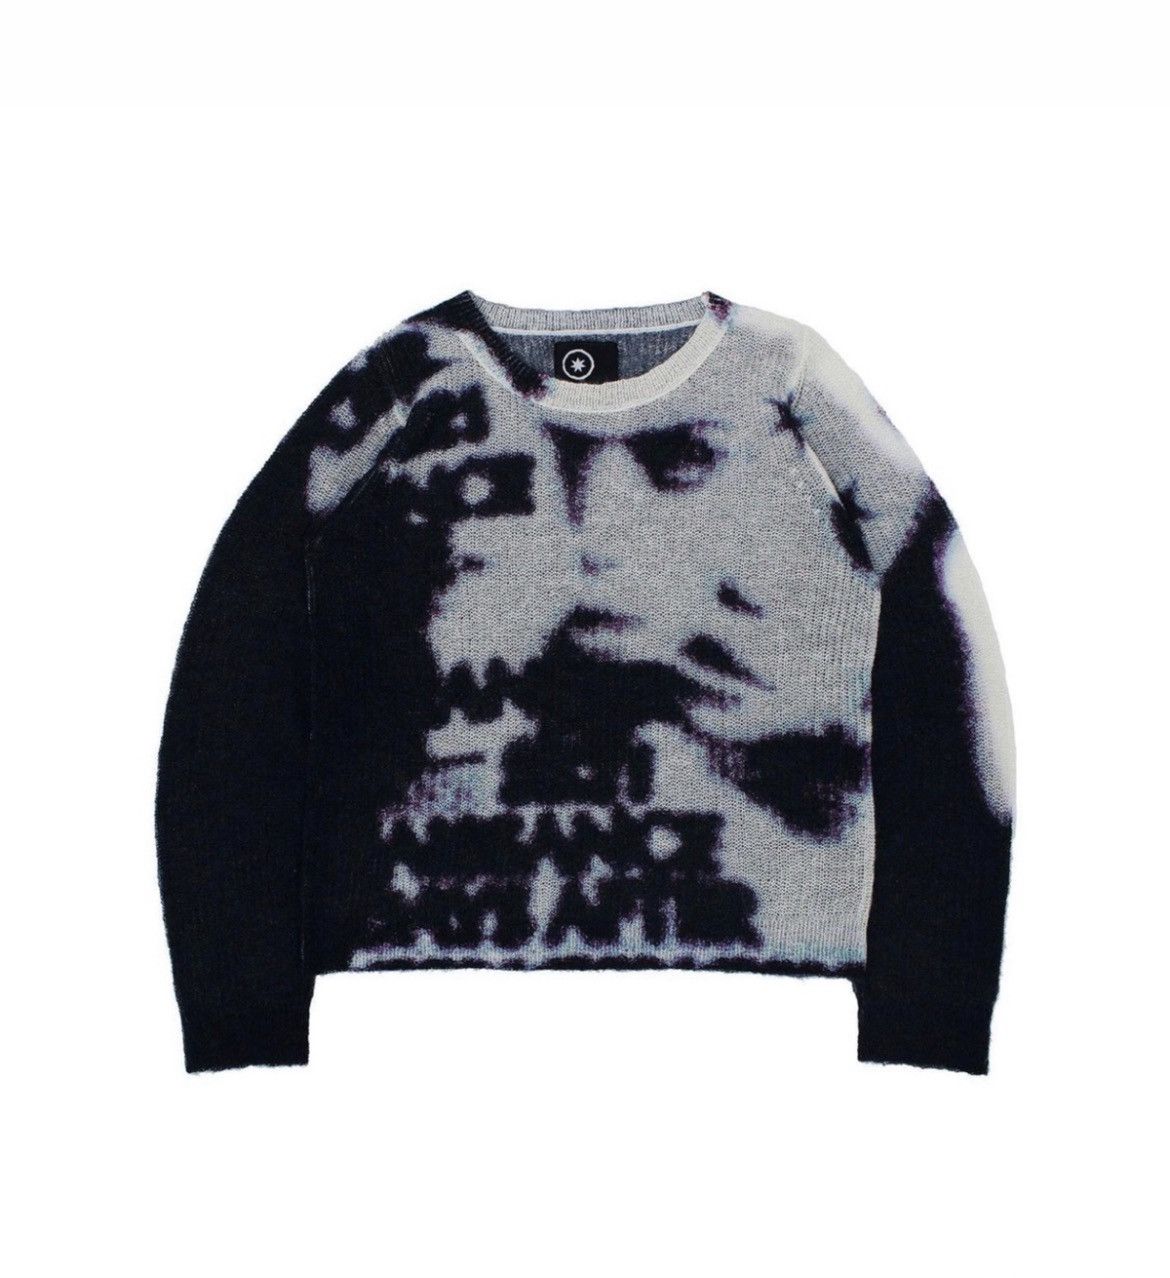 IIMIIY2 wEb double-layer knit sweater-